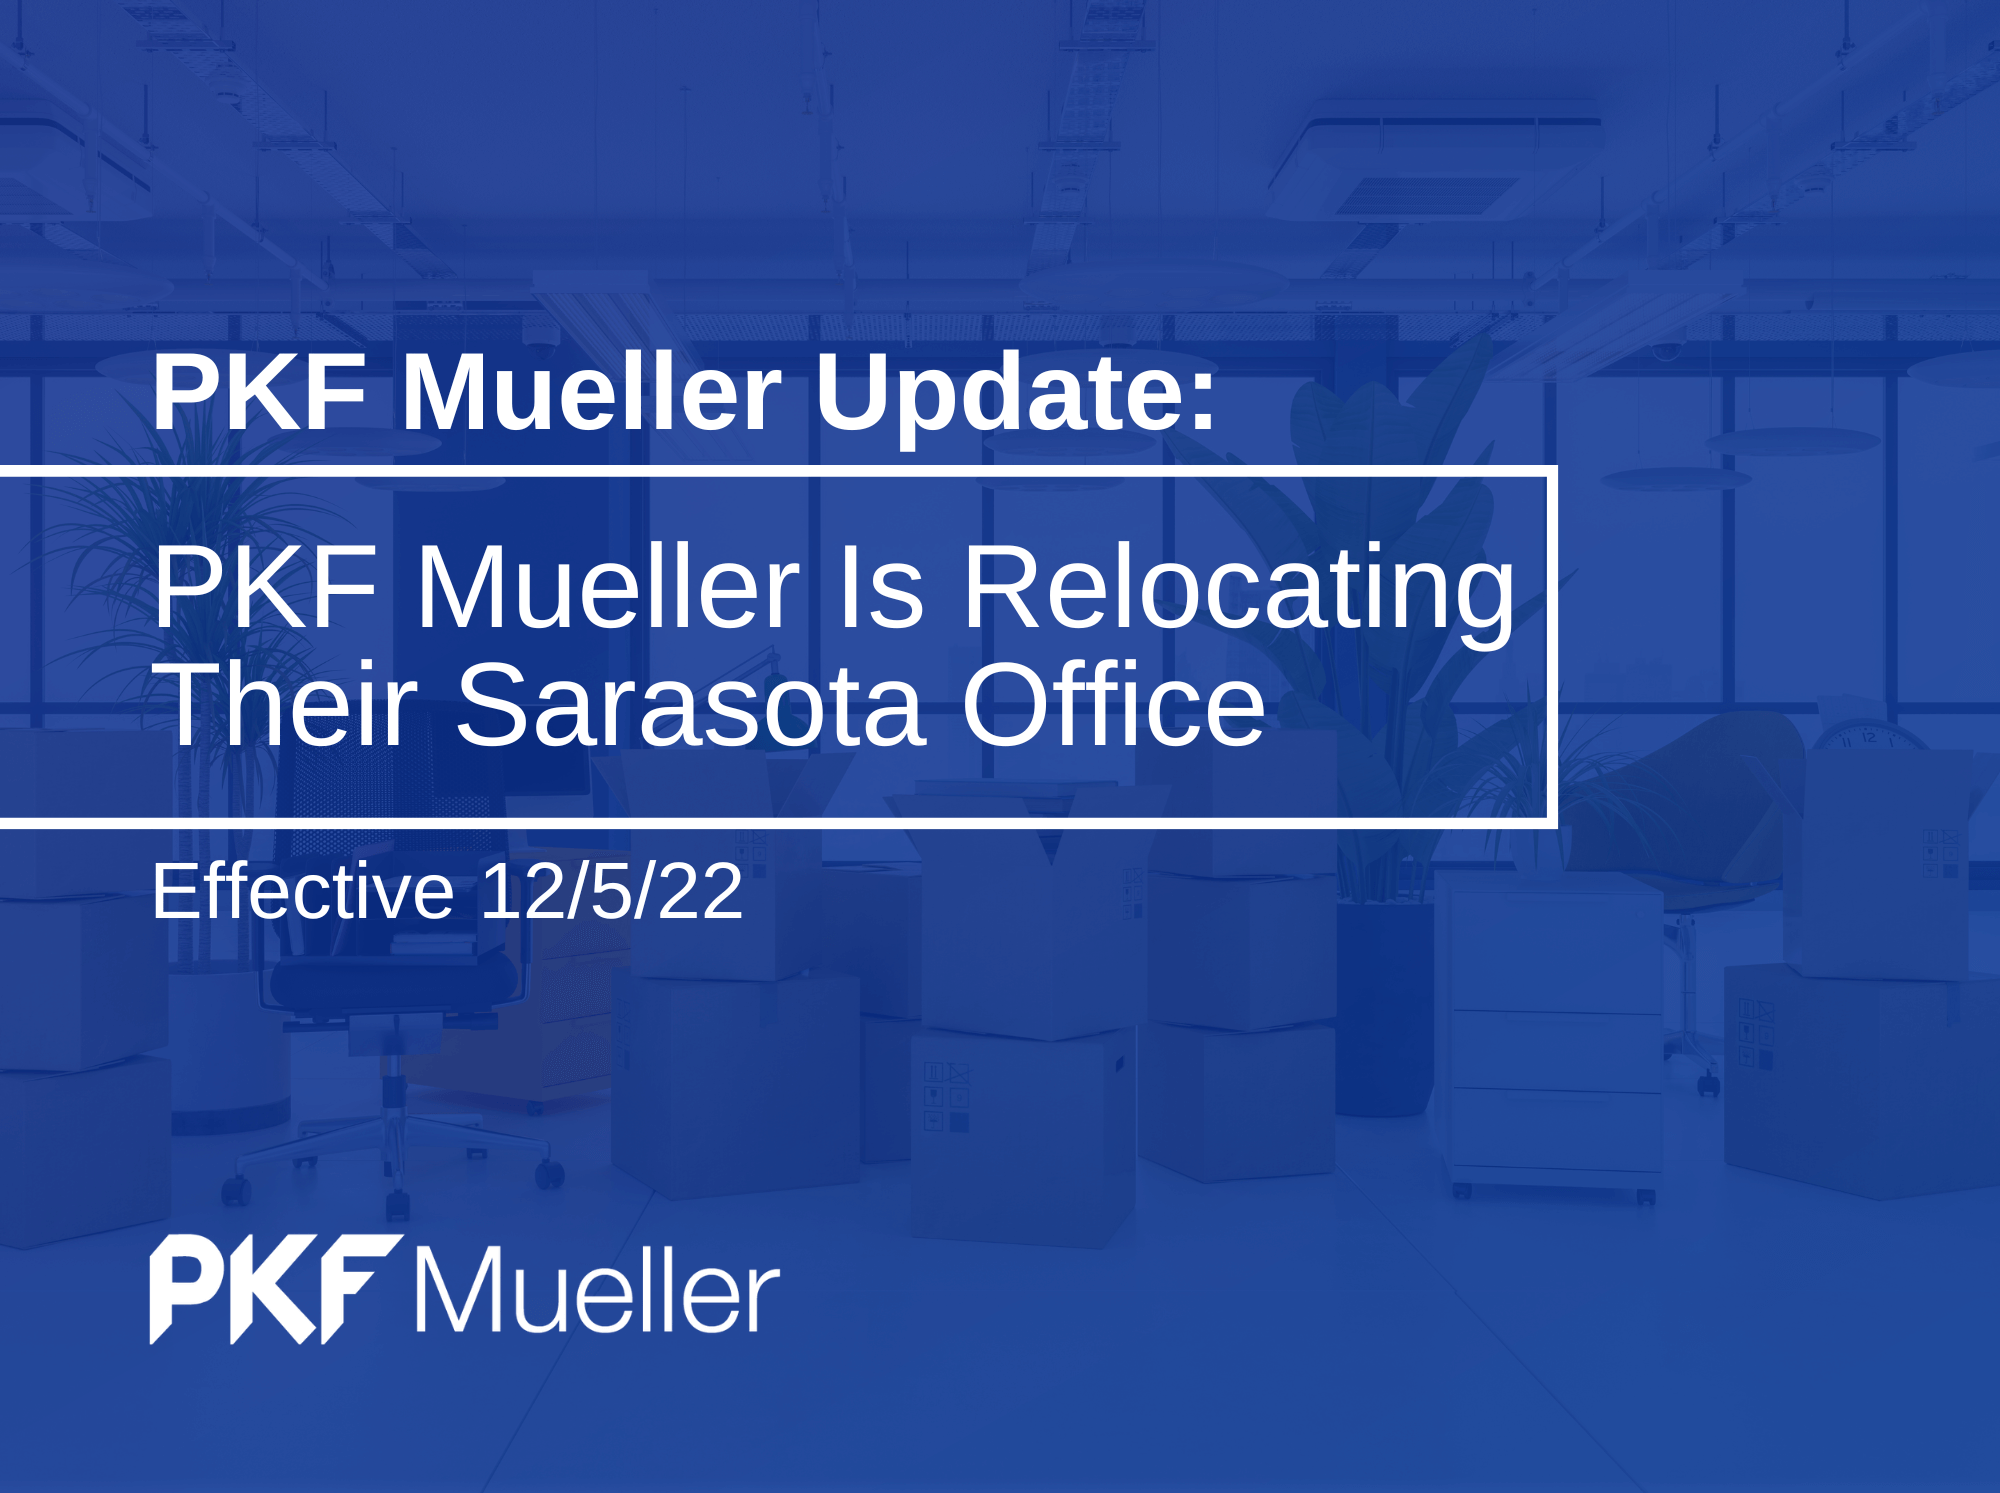 PKF Mueller is Relocating Their Sarasota Office